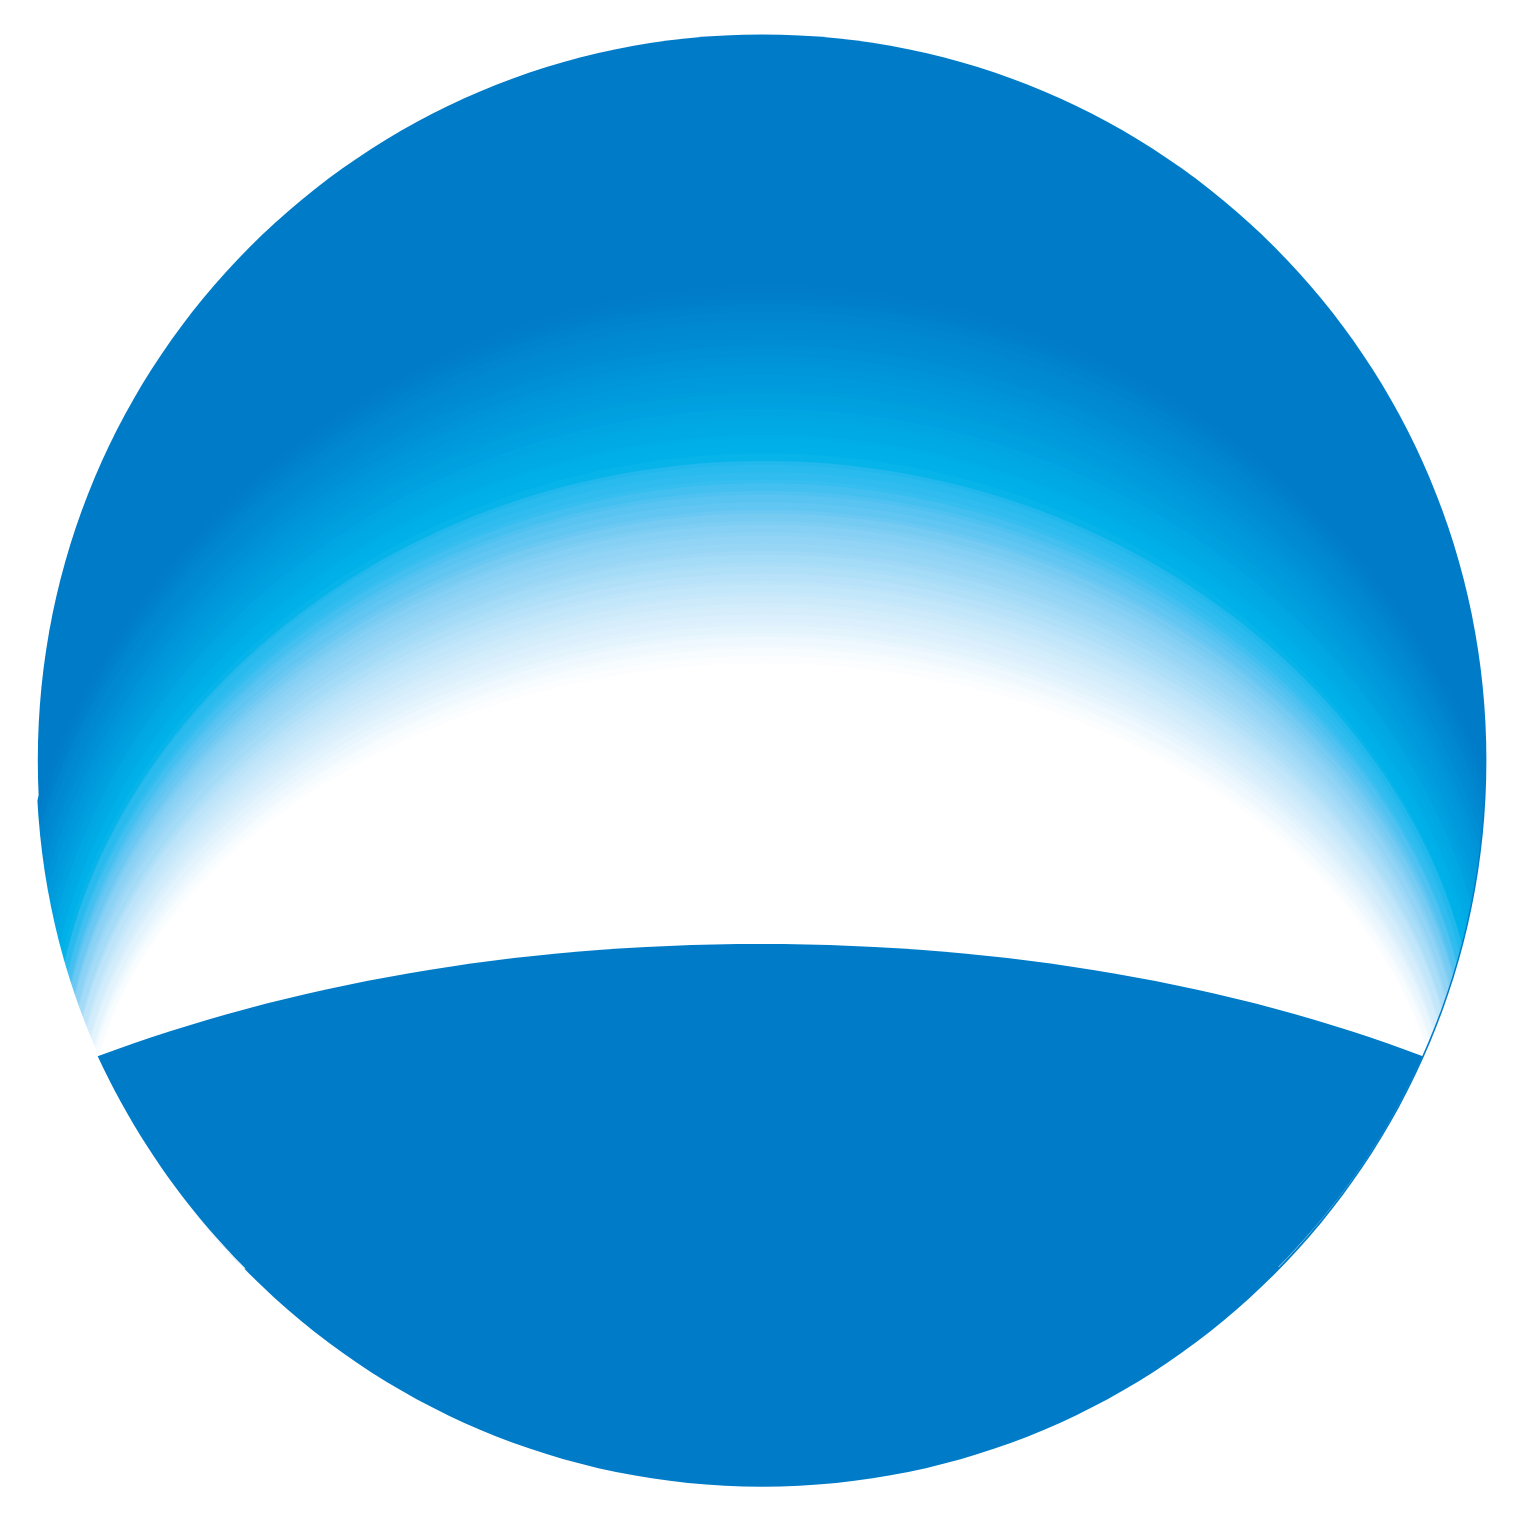 Woori Financial Group logo (transparent PNG)